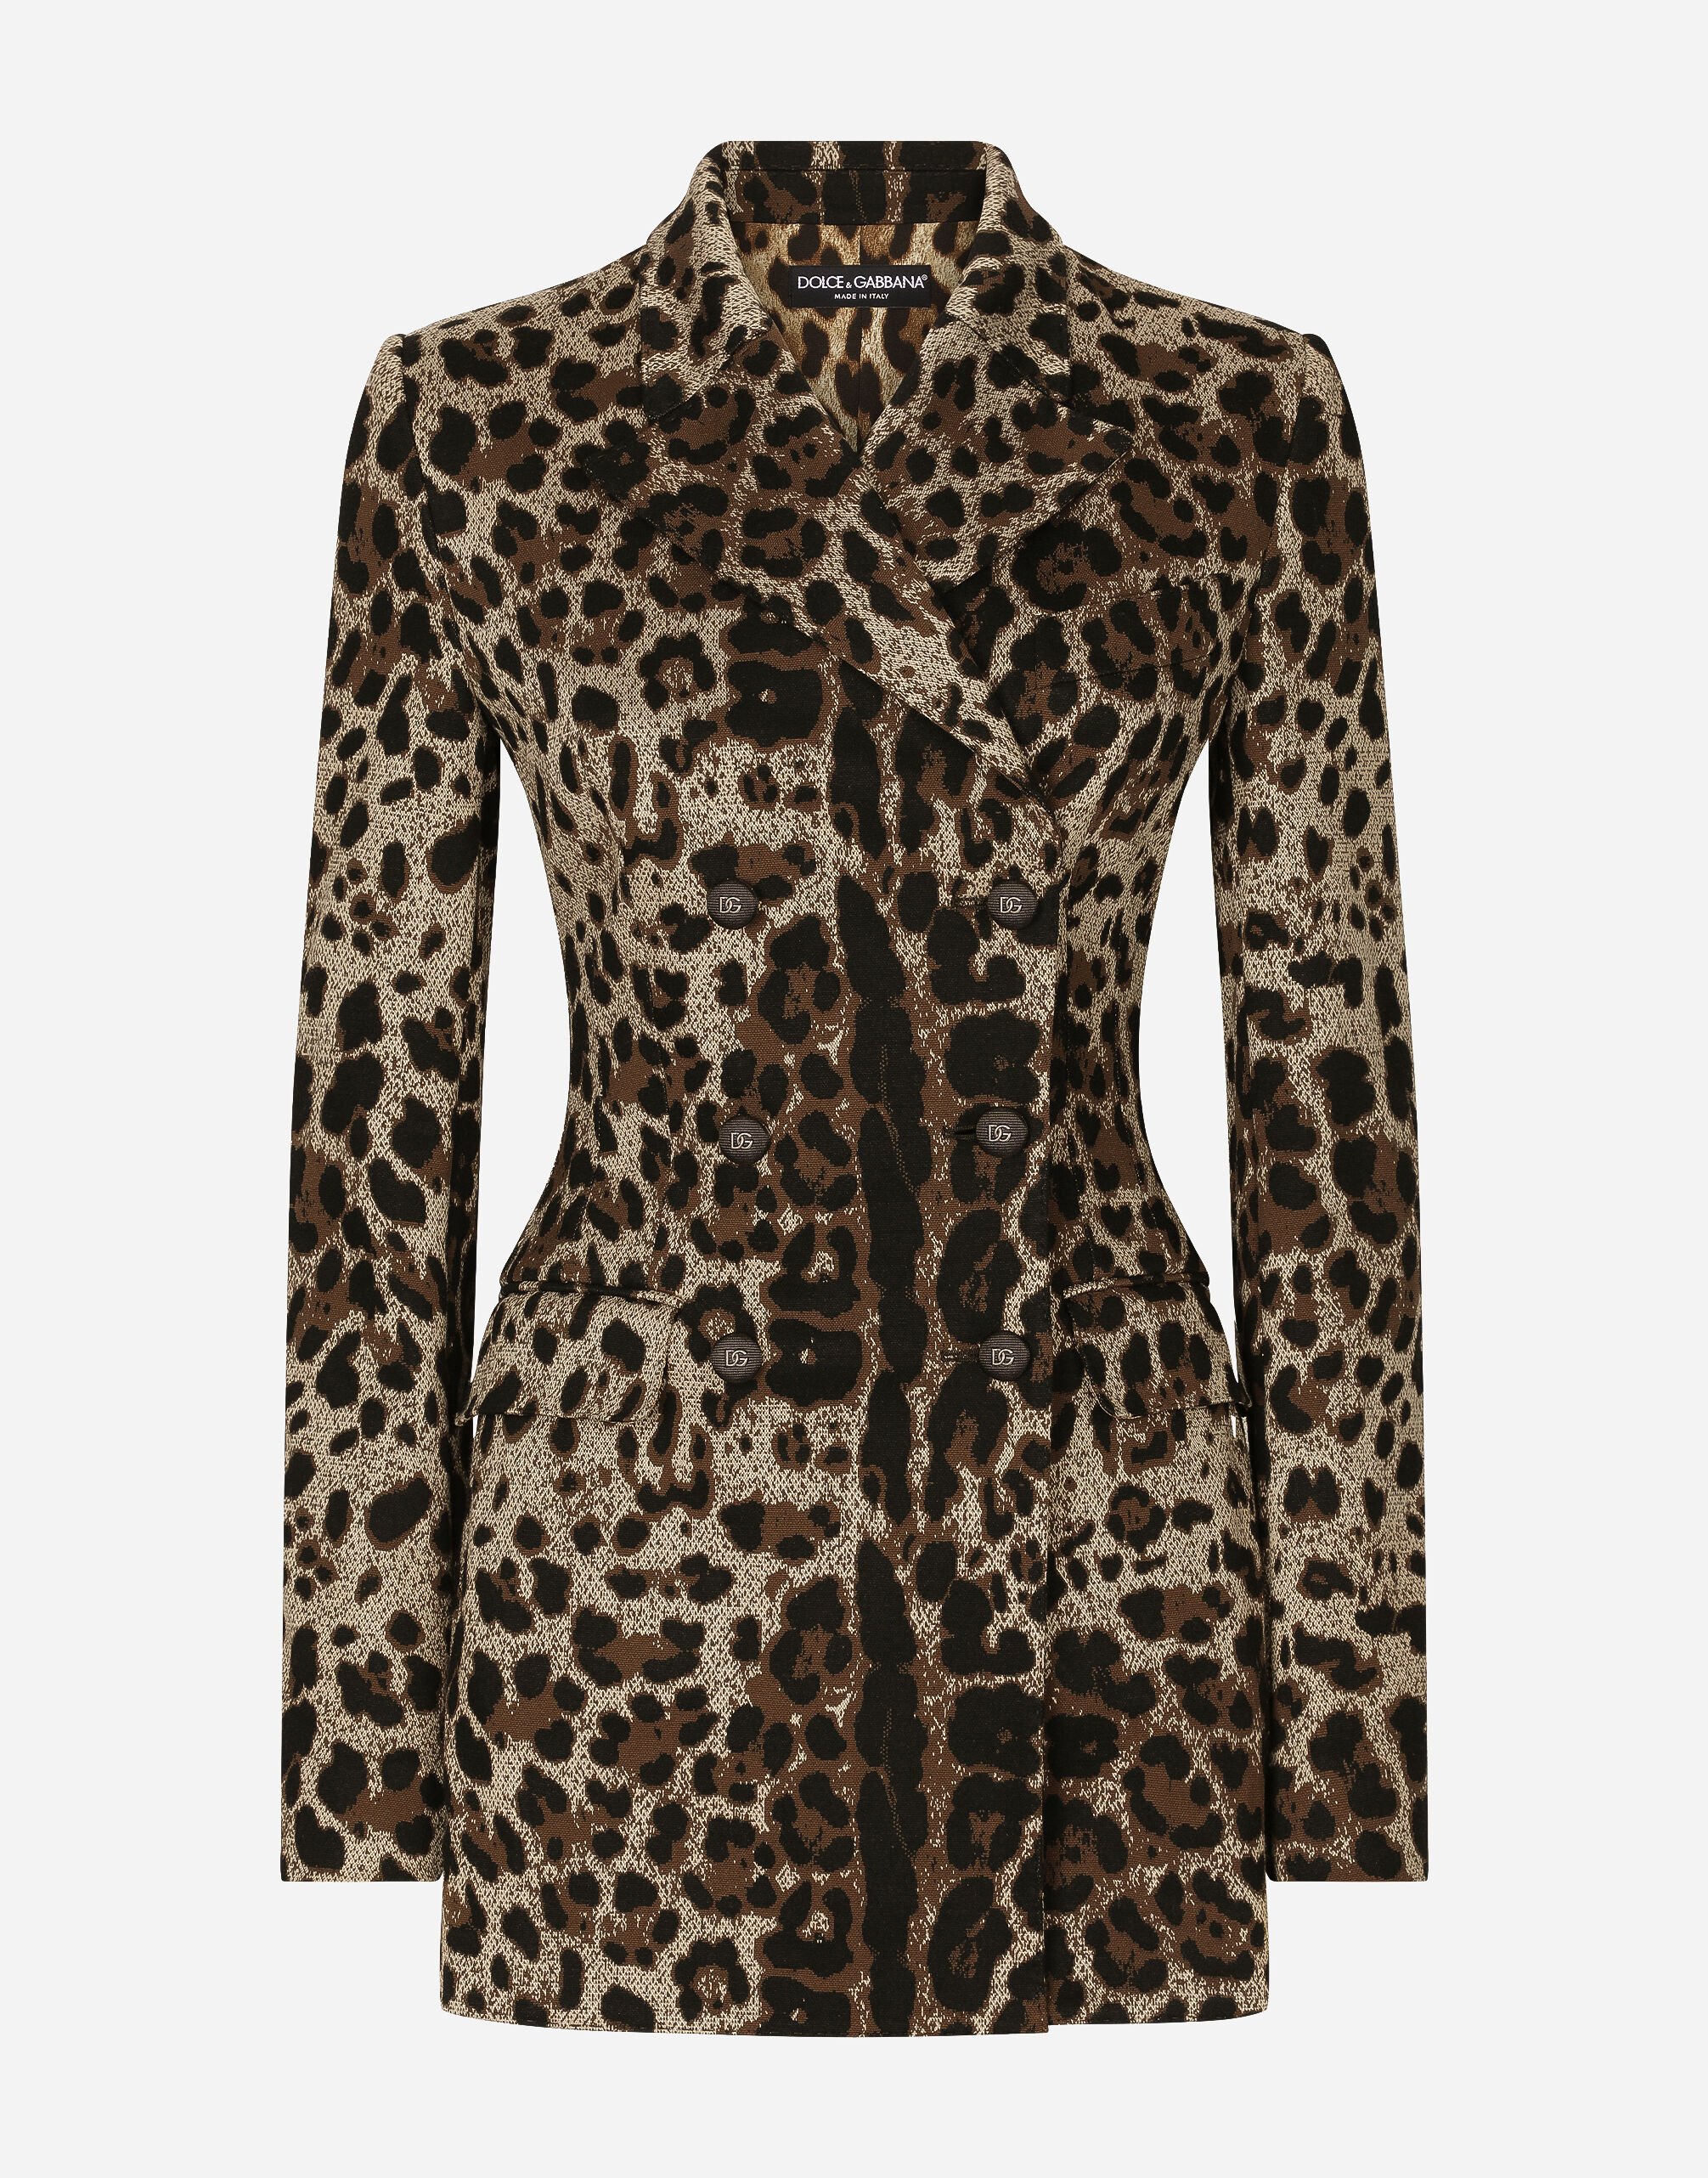 Dolce&Gabbana Giacca Turlington doppiopetto in lana Jacquard leopardo Stampa Animalier F9R11THSMW8